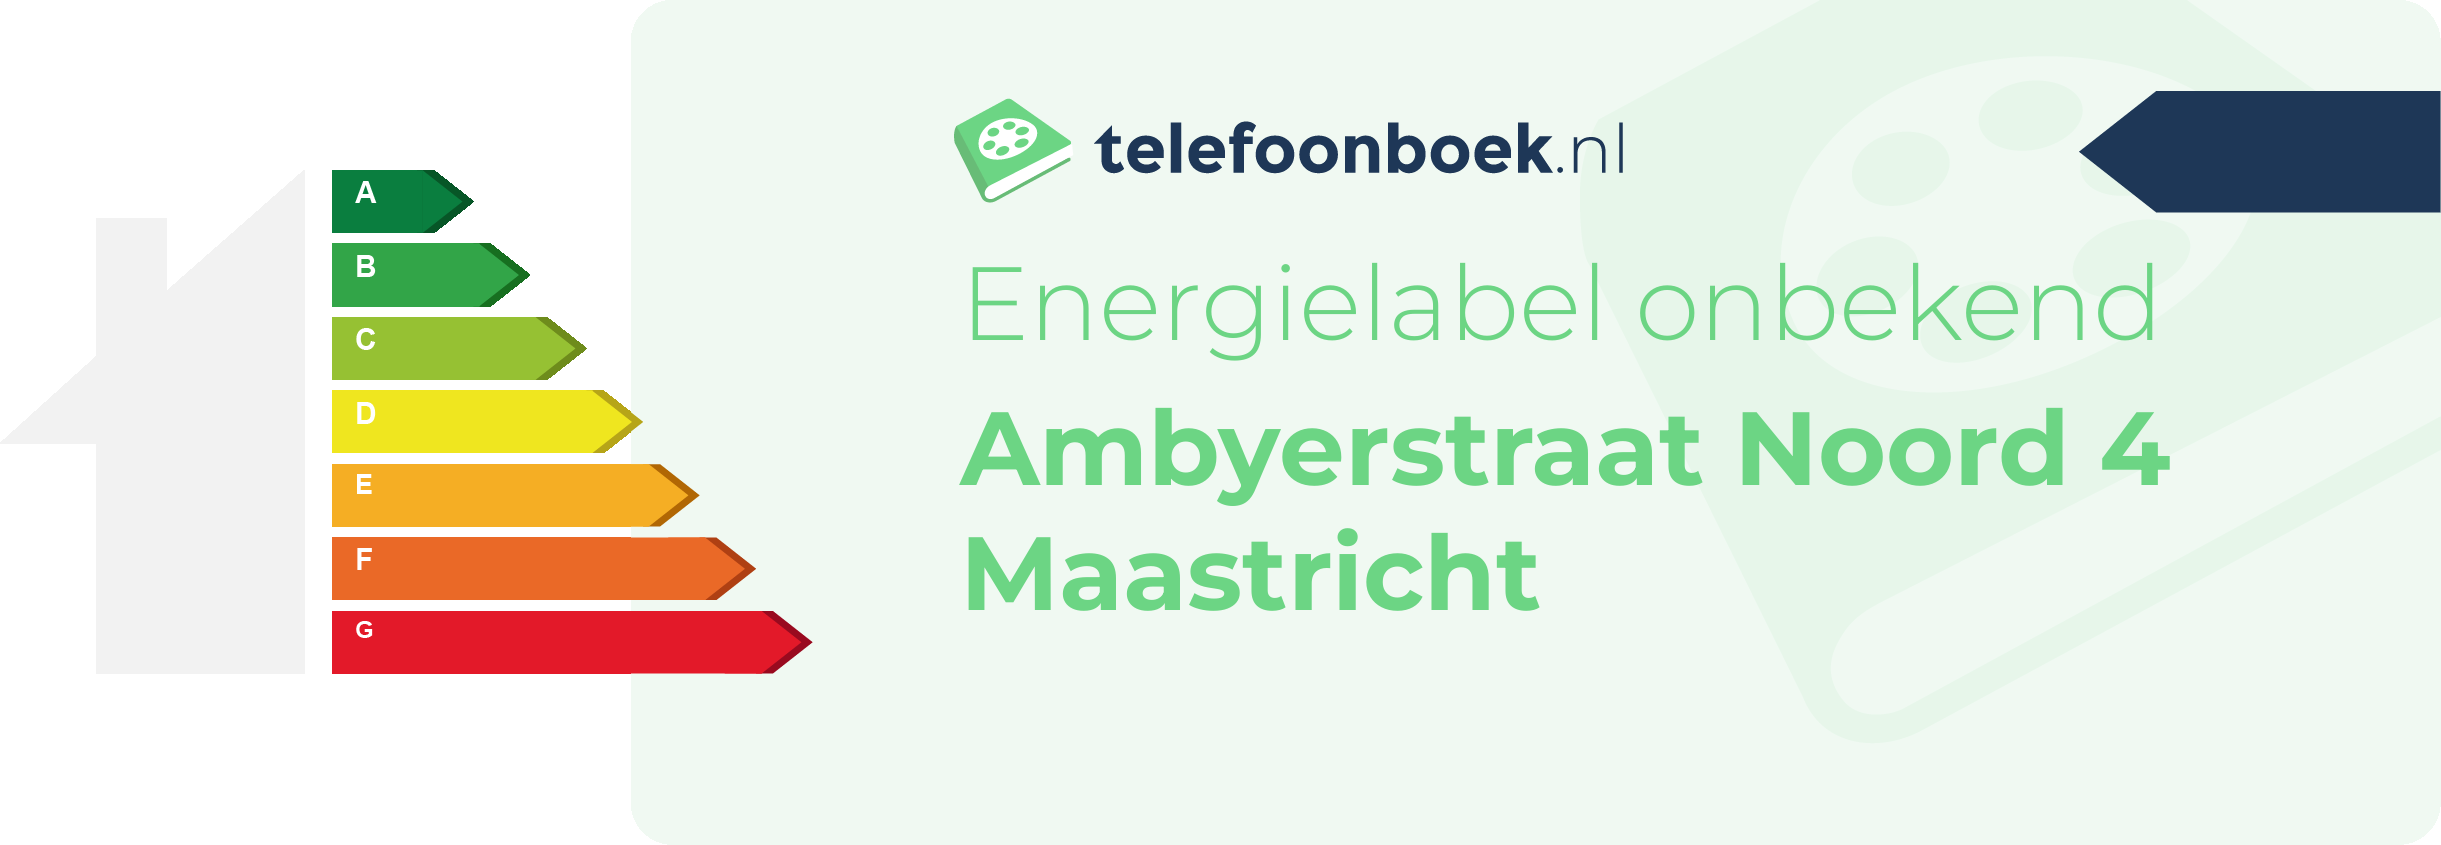 Energielabel Ambyerstraat Noord 4 Maastricht